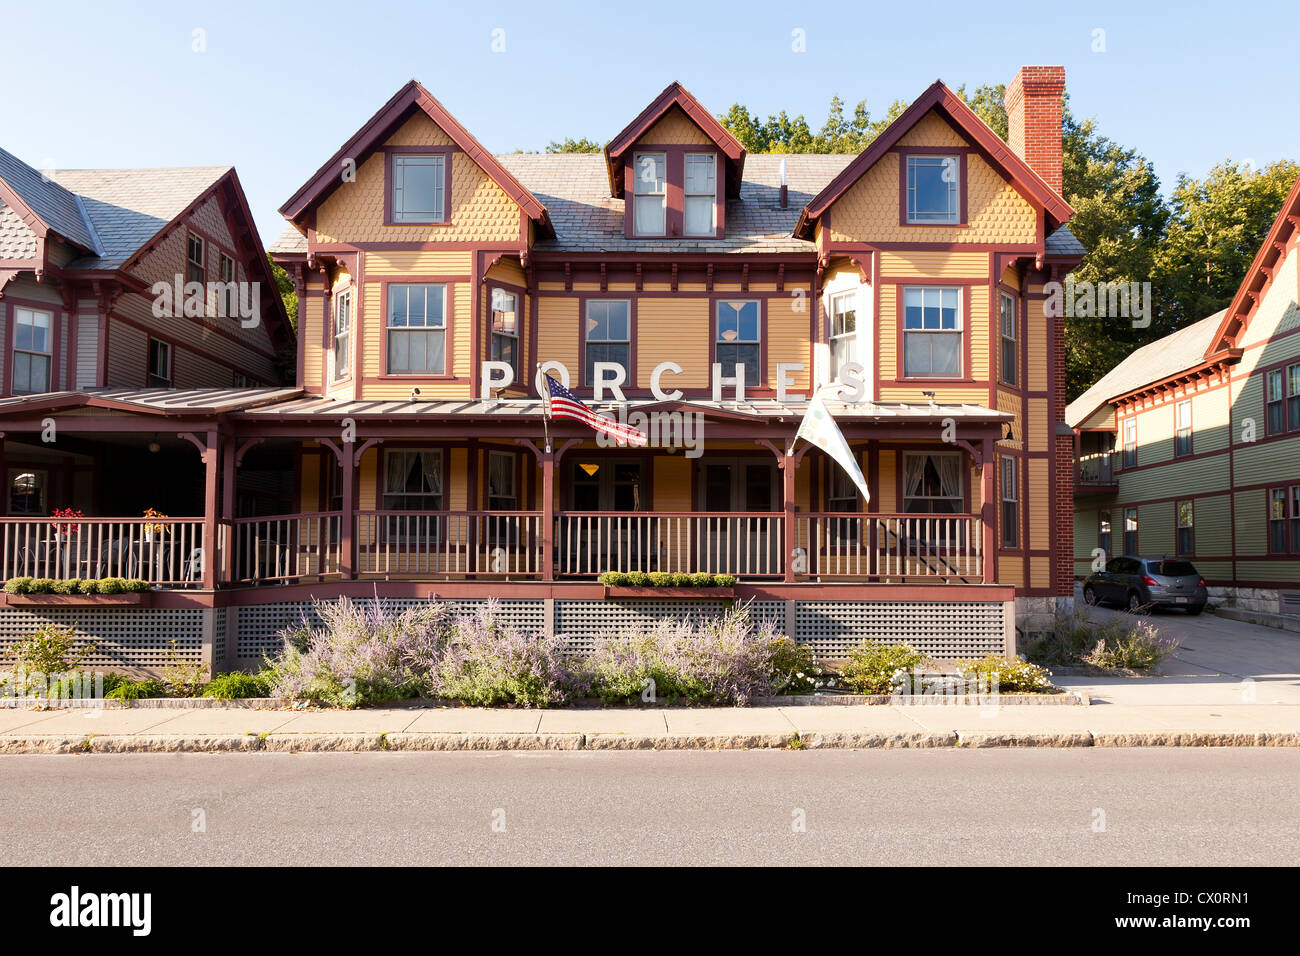 Porches Inn, North Adams, MA Stock Photo - Alamy